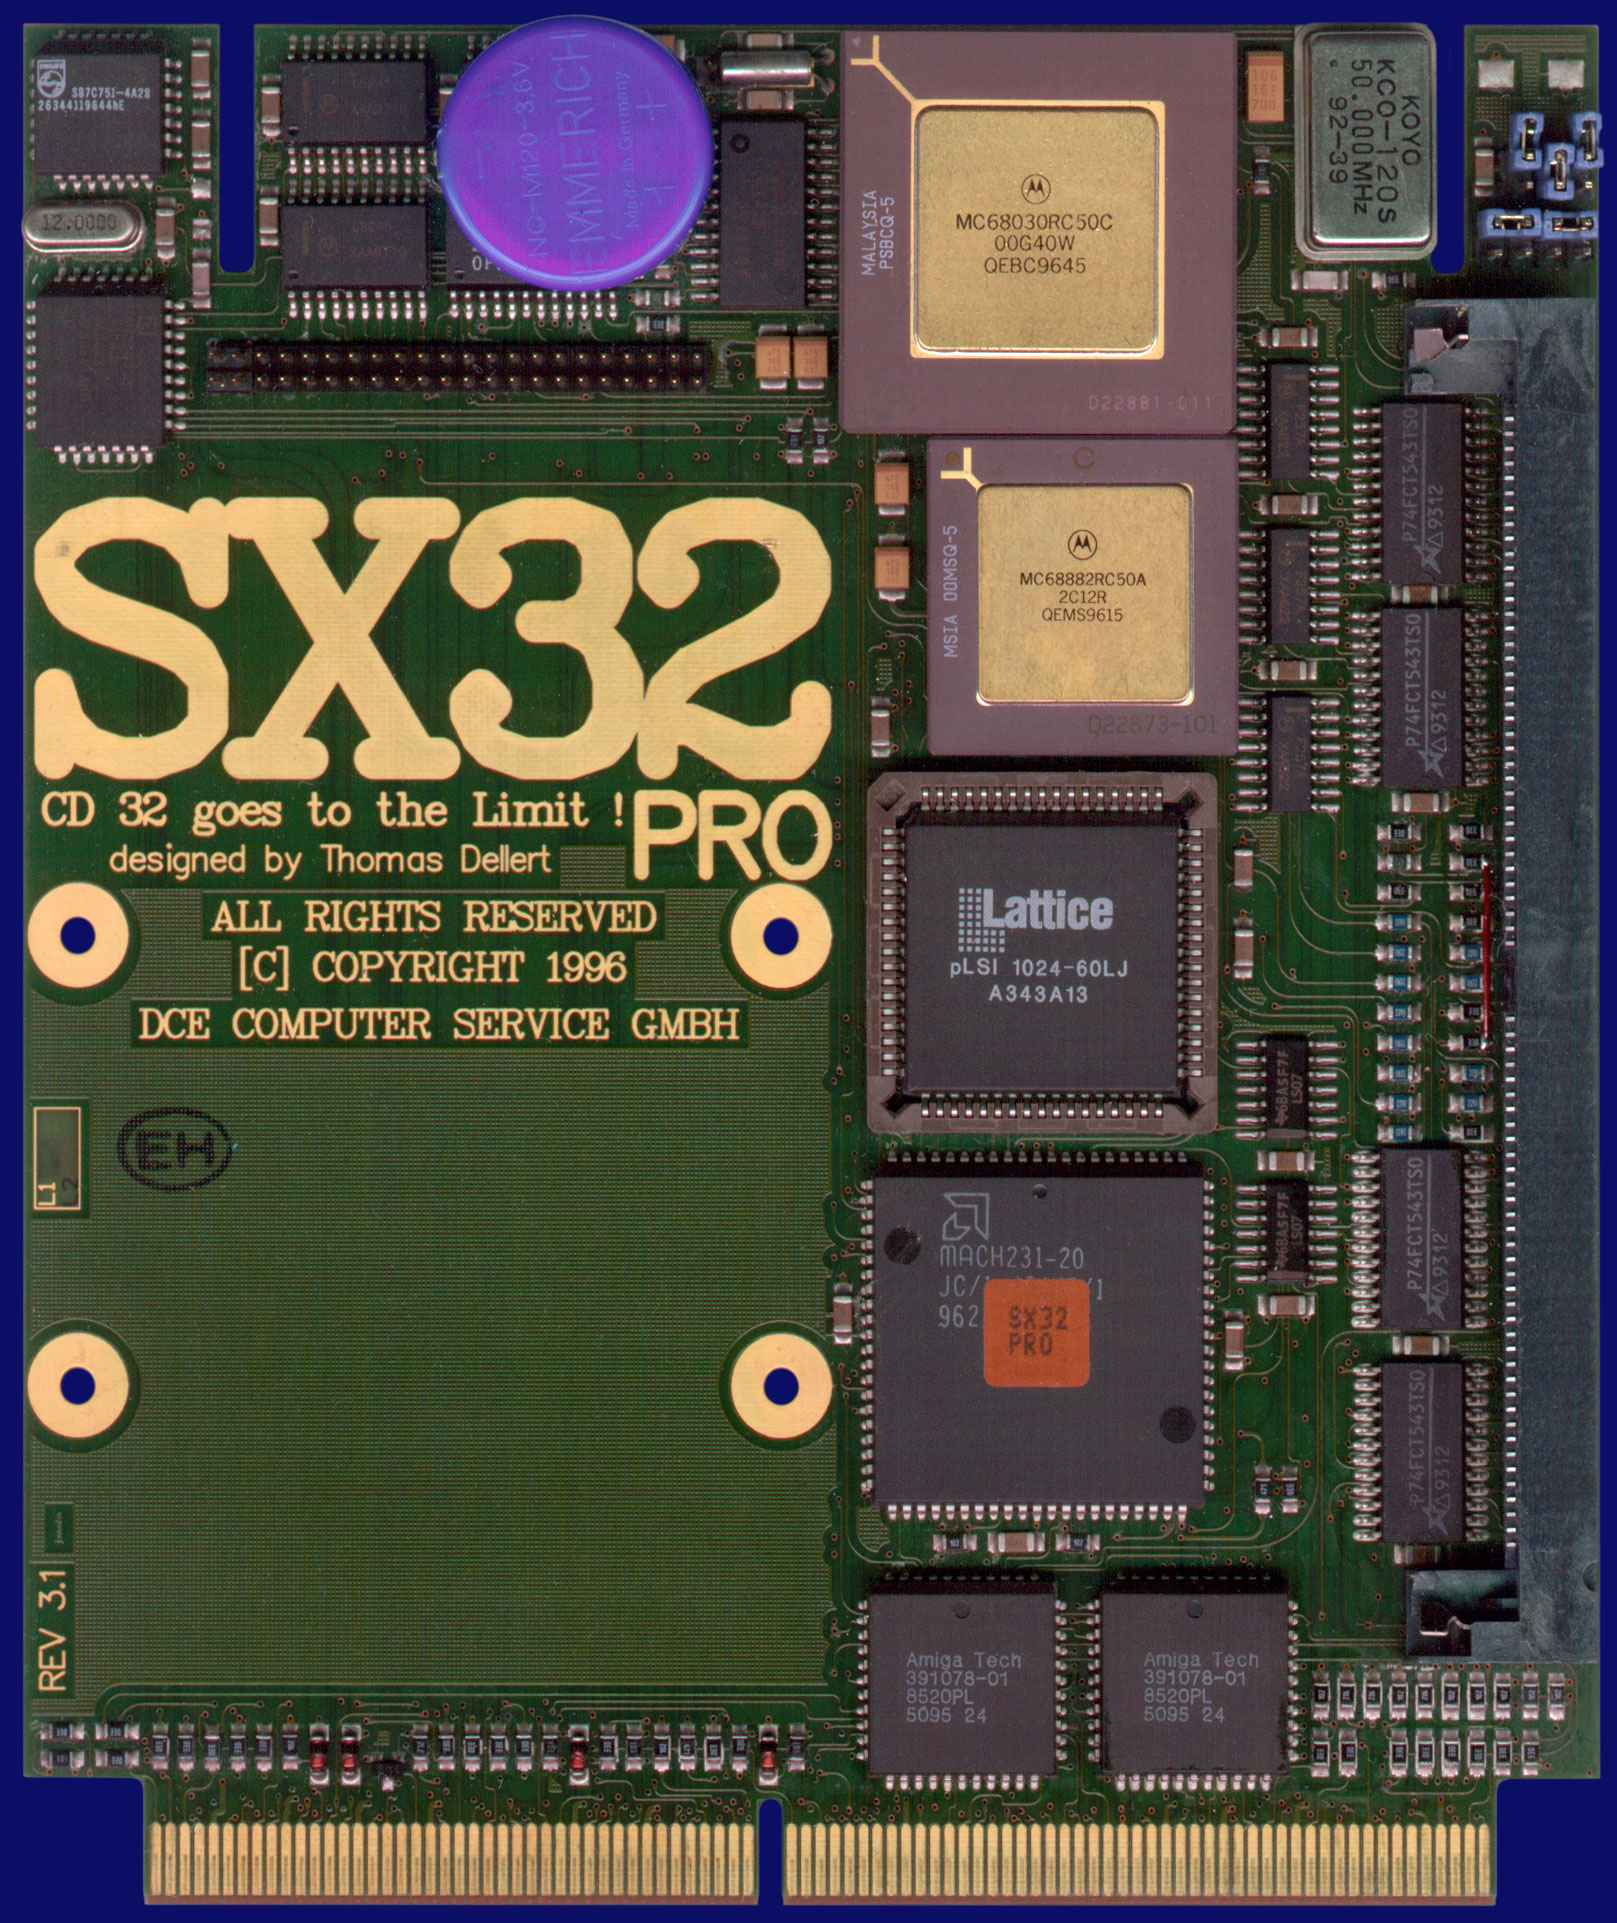 DCE SX 32 Pro - Hauptkarte, Vorderseite